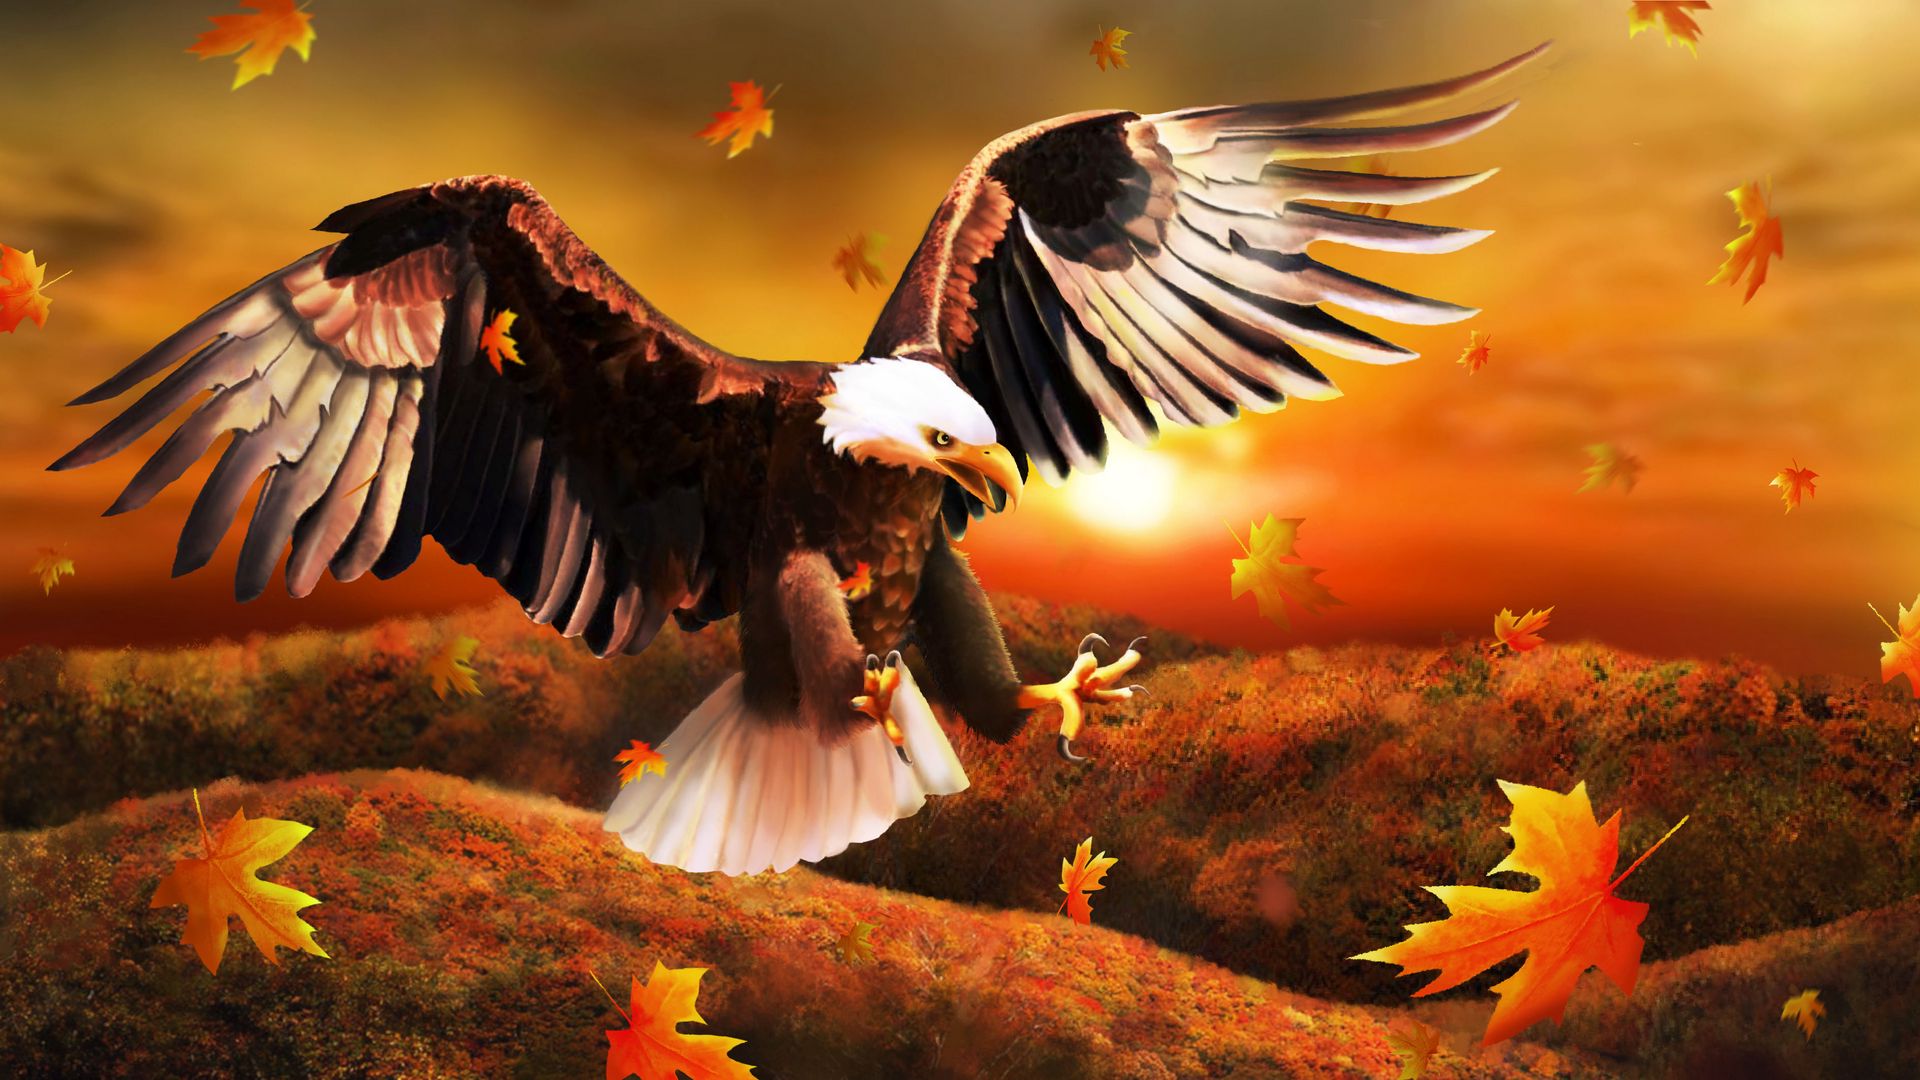 Download wallpaper 1920x1080 eagle, bird, leaves, art full hd, hdtv, fhd, 1080p  hd background